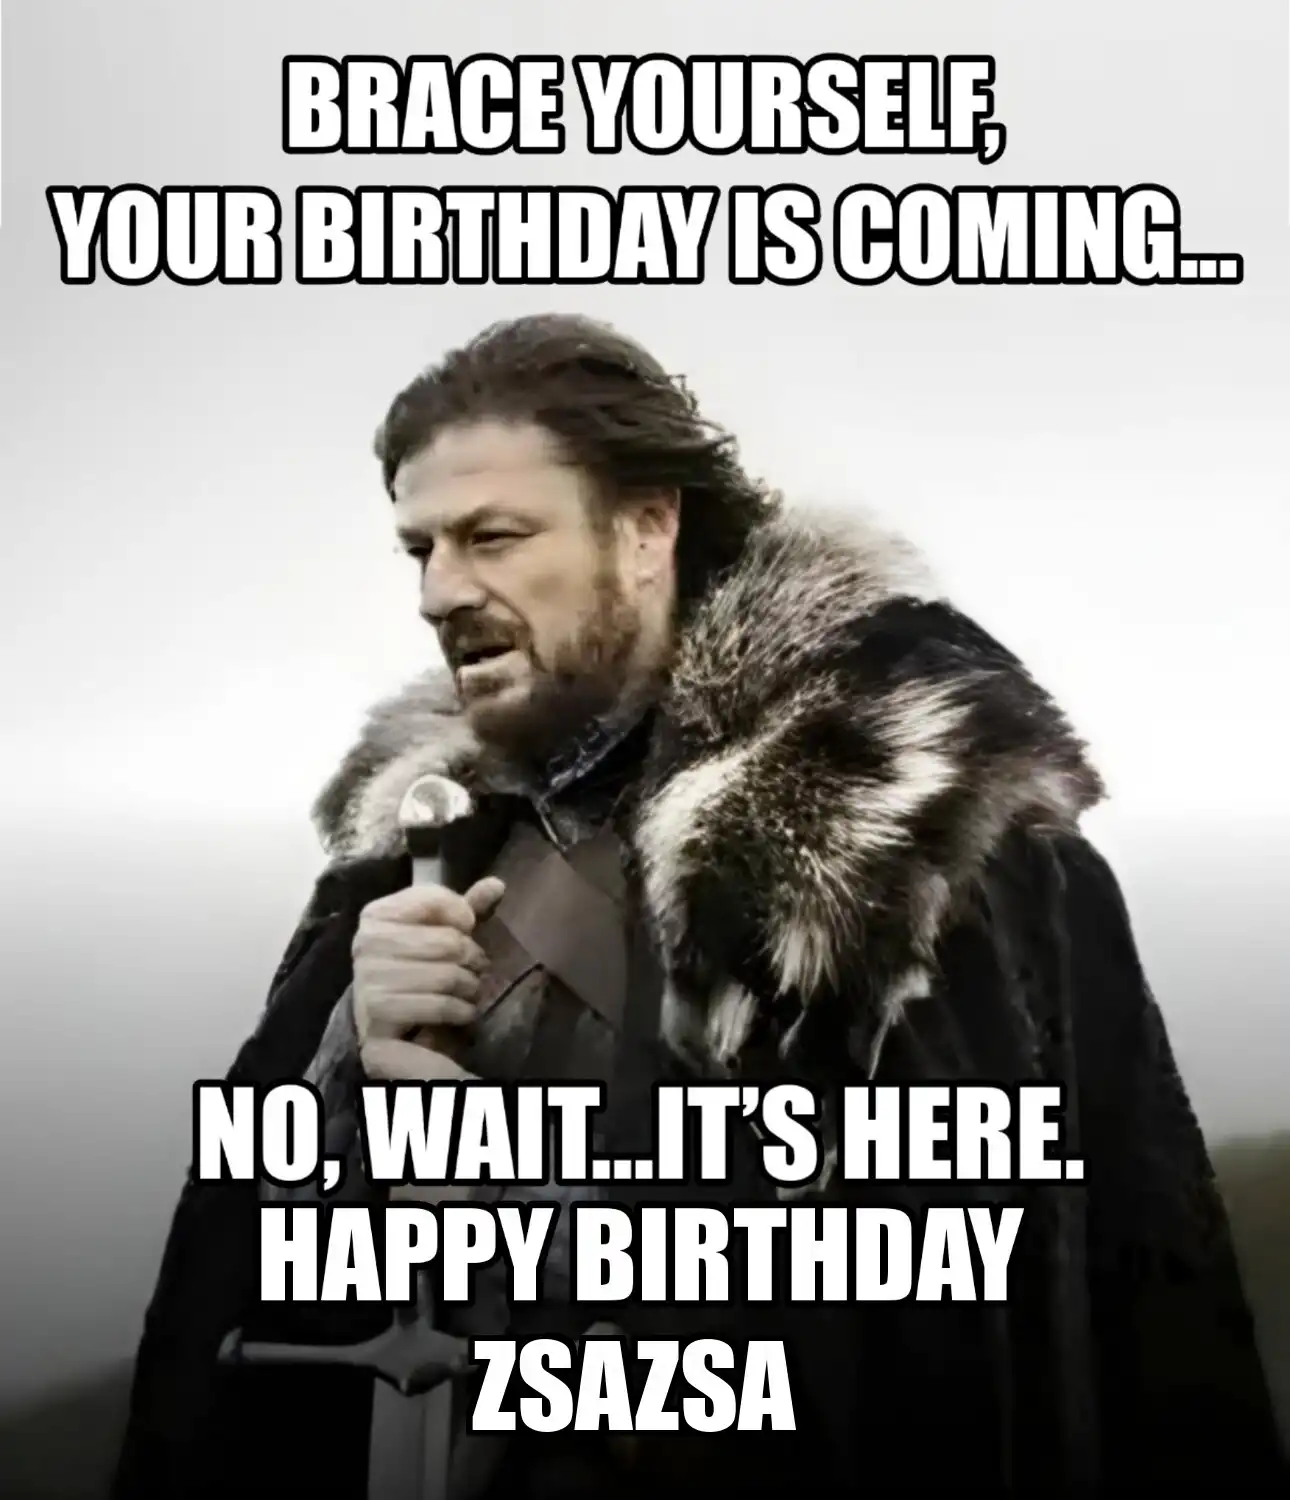 Happy Birthday Zsazsa Brace Yourself Your Birthday Is Coming Meme